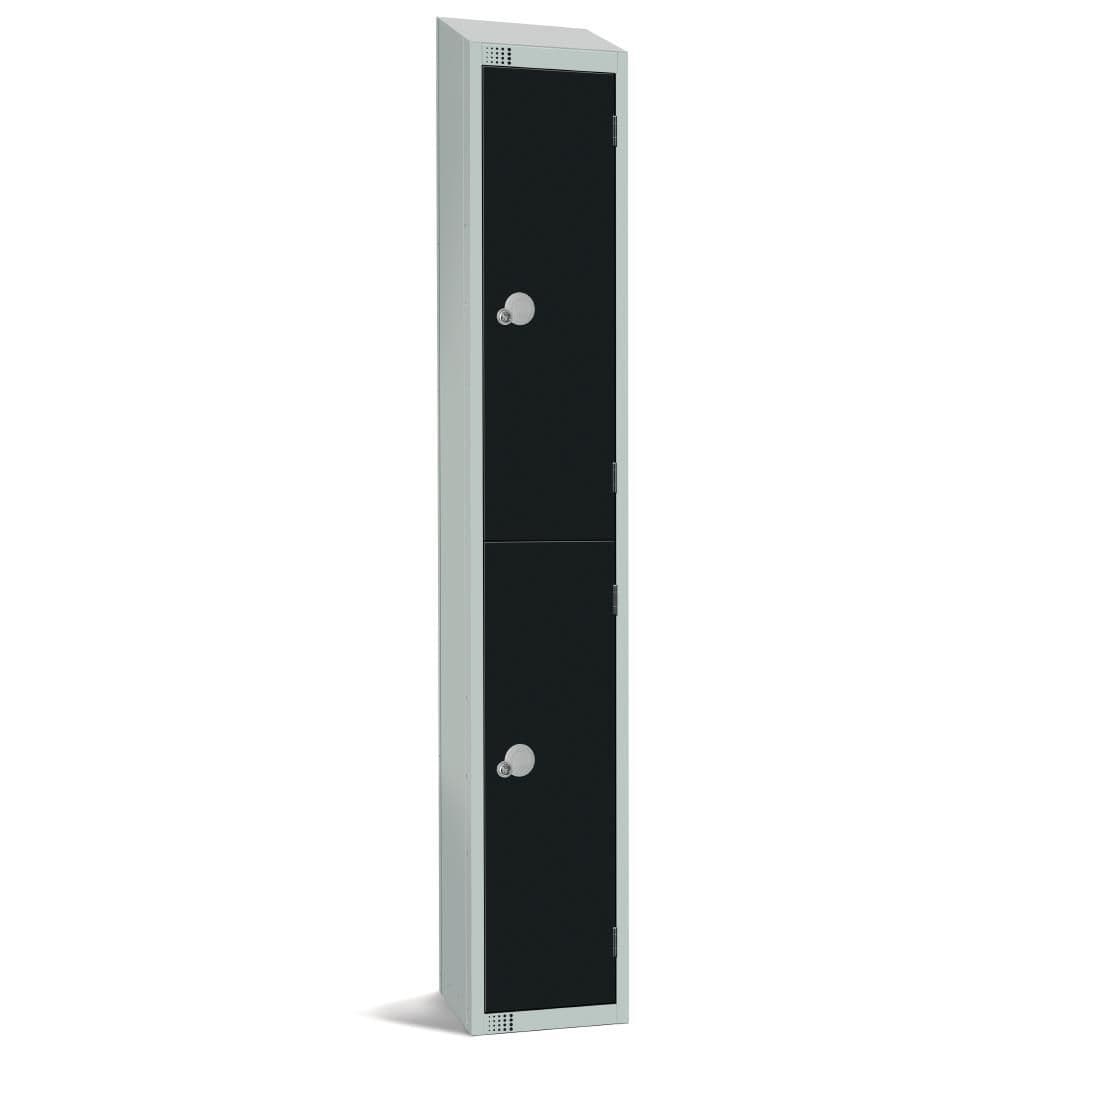 GR671-CLS Elite Double Door Manual Combination Locker Locker Black with sloping top JD Catering Equipment Solutions Ltd